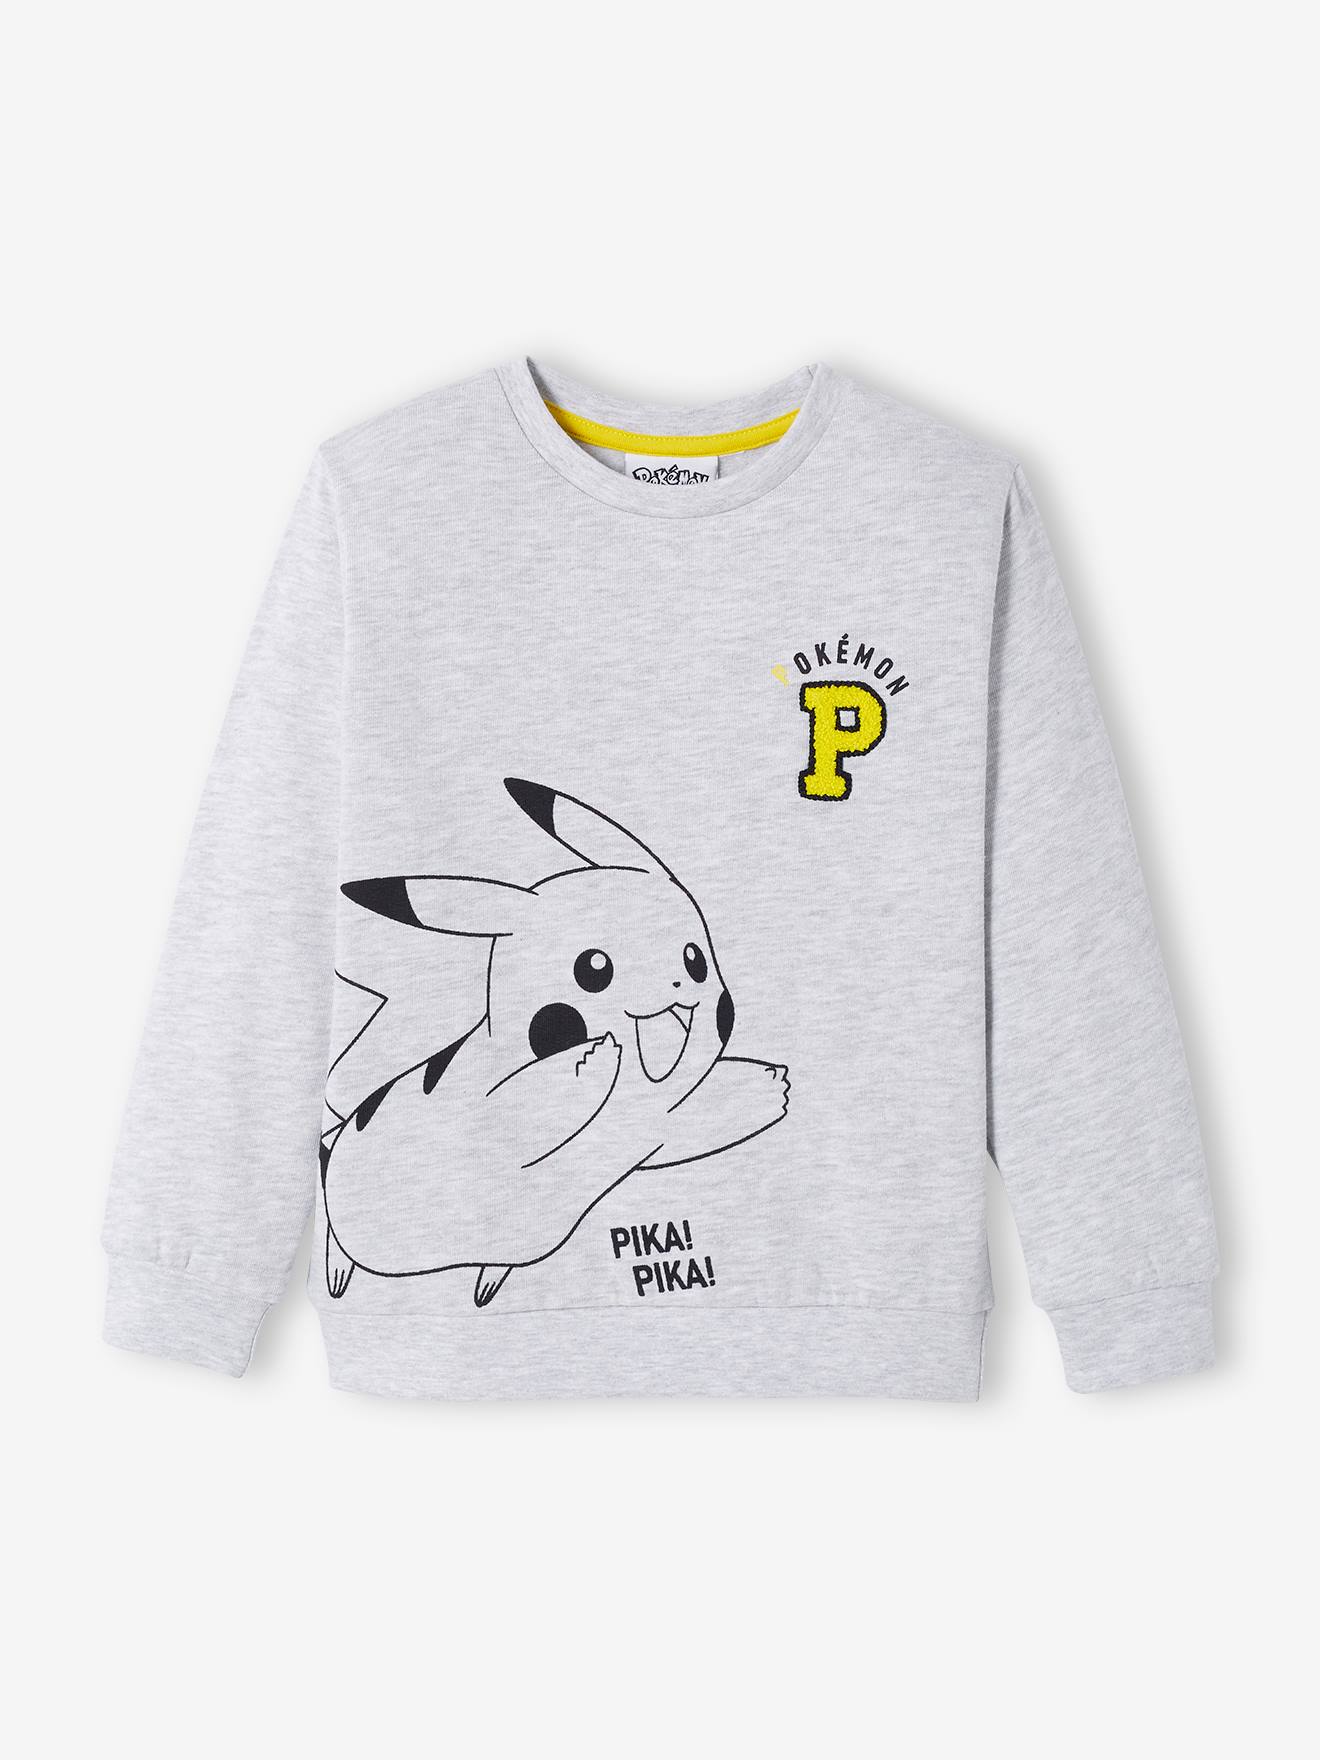 Pokemon(r) Sweatshirt for Boys grey light solid with design